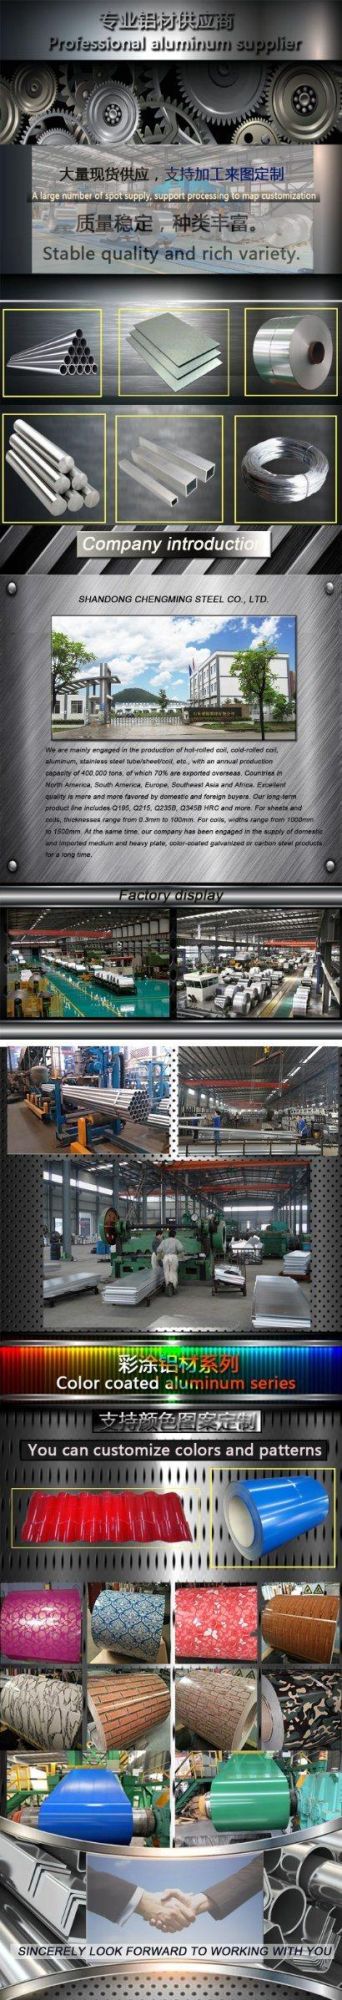 A1050 1060 1100 3003 3105 5052 Aluminium Steel Coil Mill Finish Aluminum Coil Fast Delivery